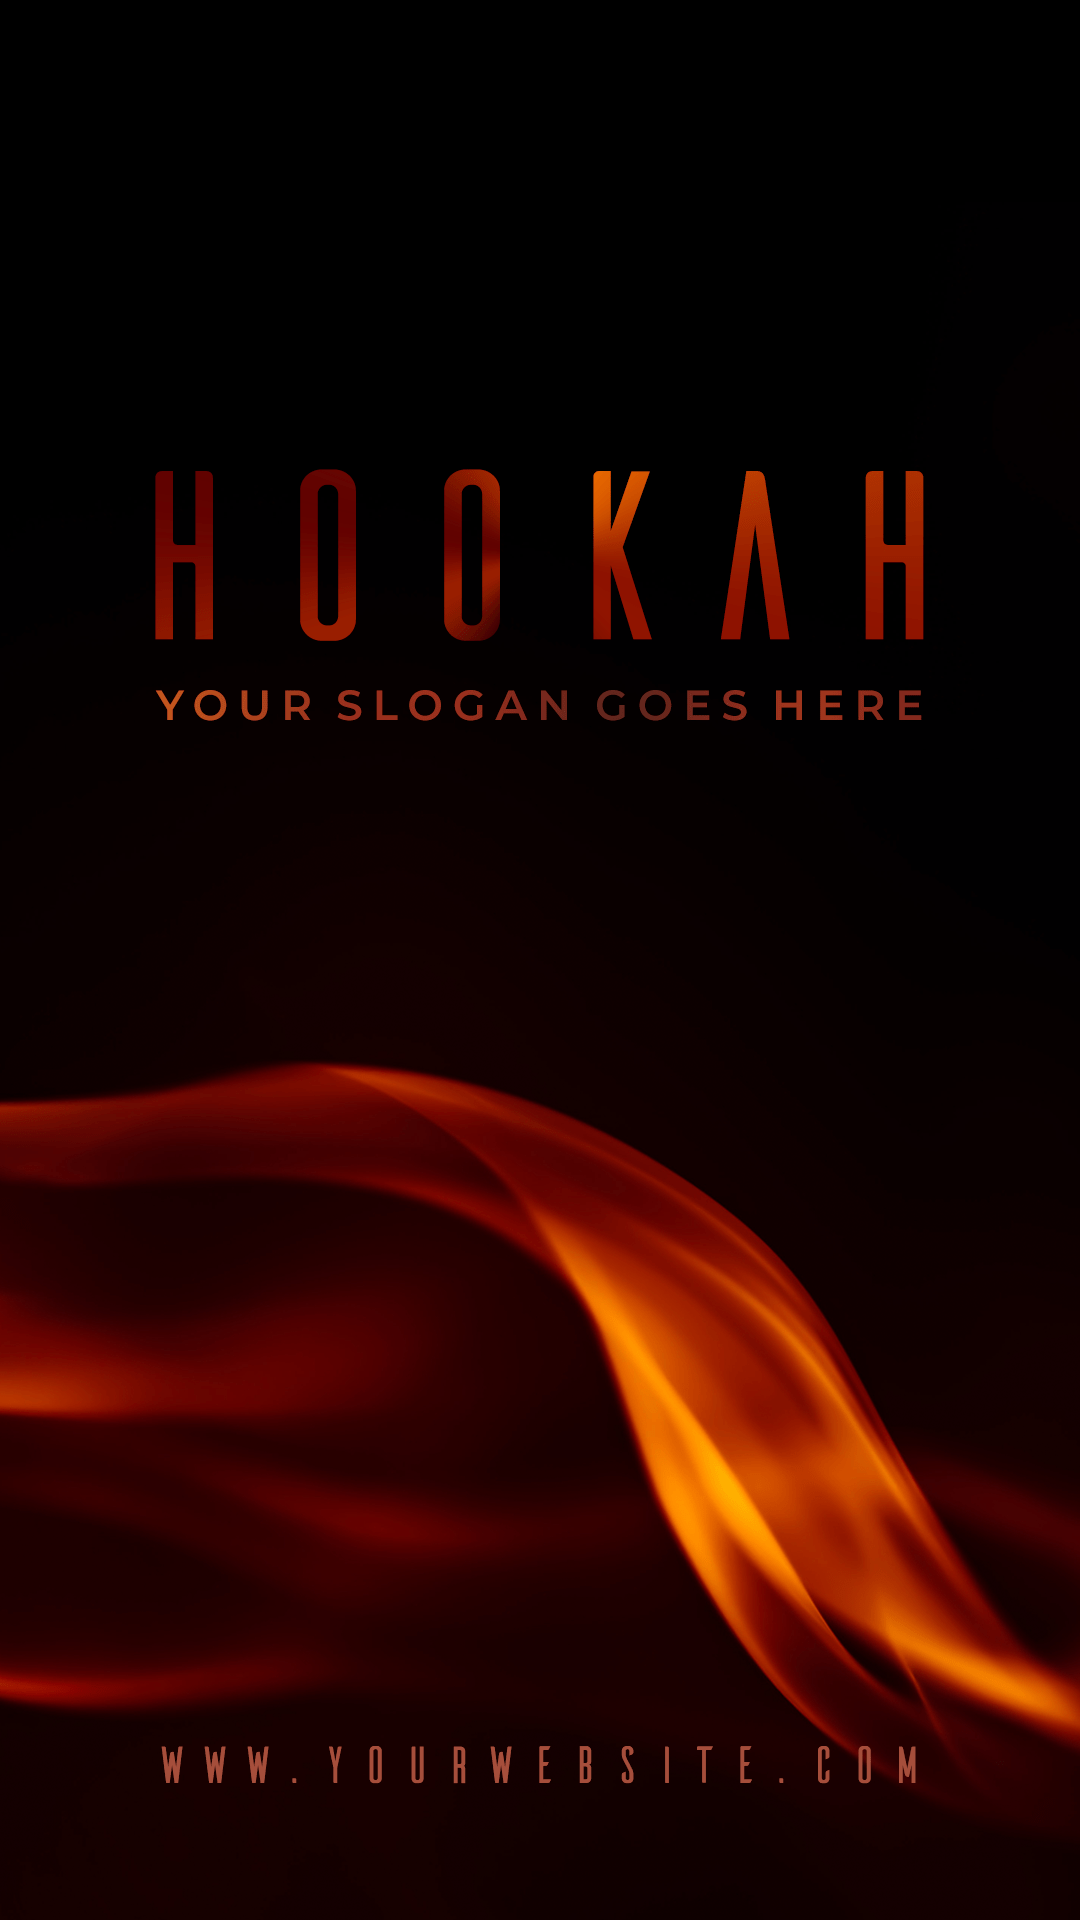 Free Hookah Social Media Banners - Free PSD Templates